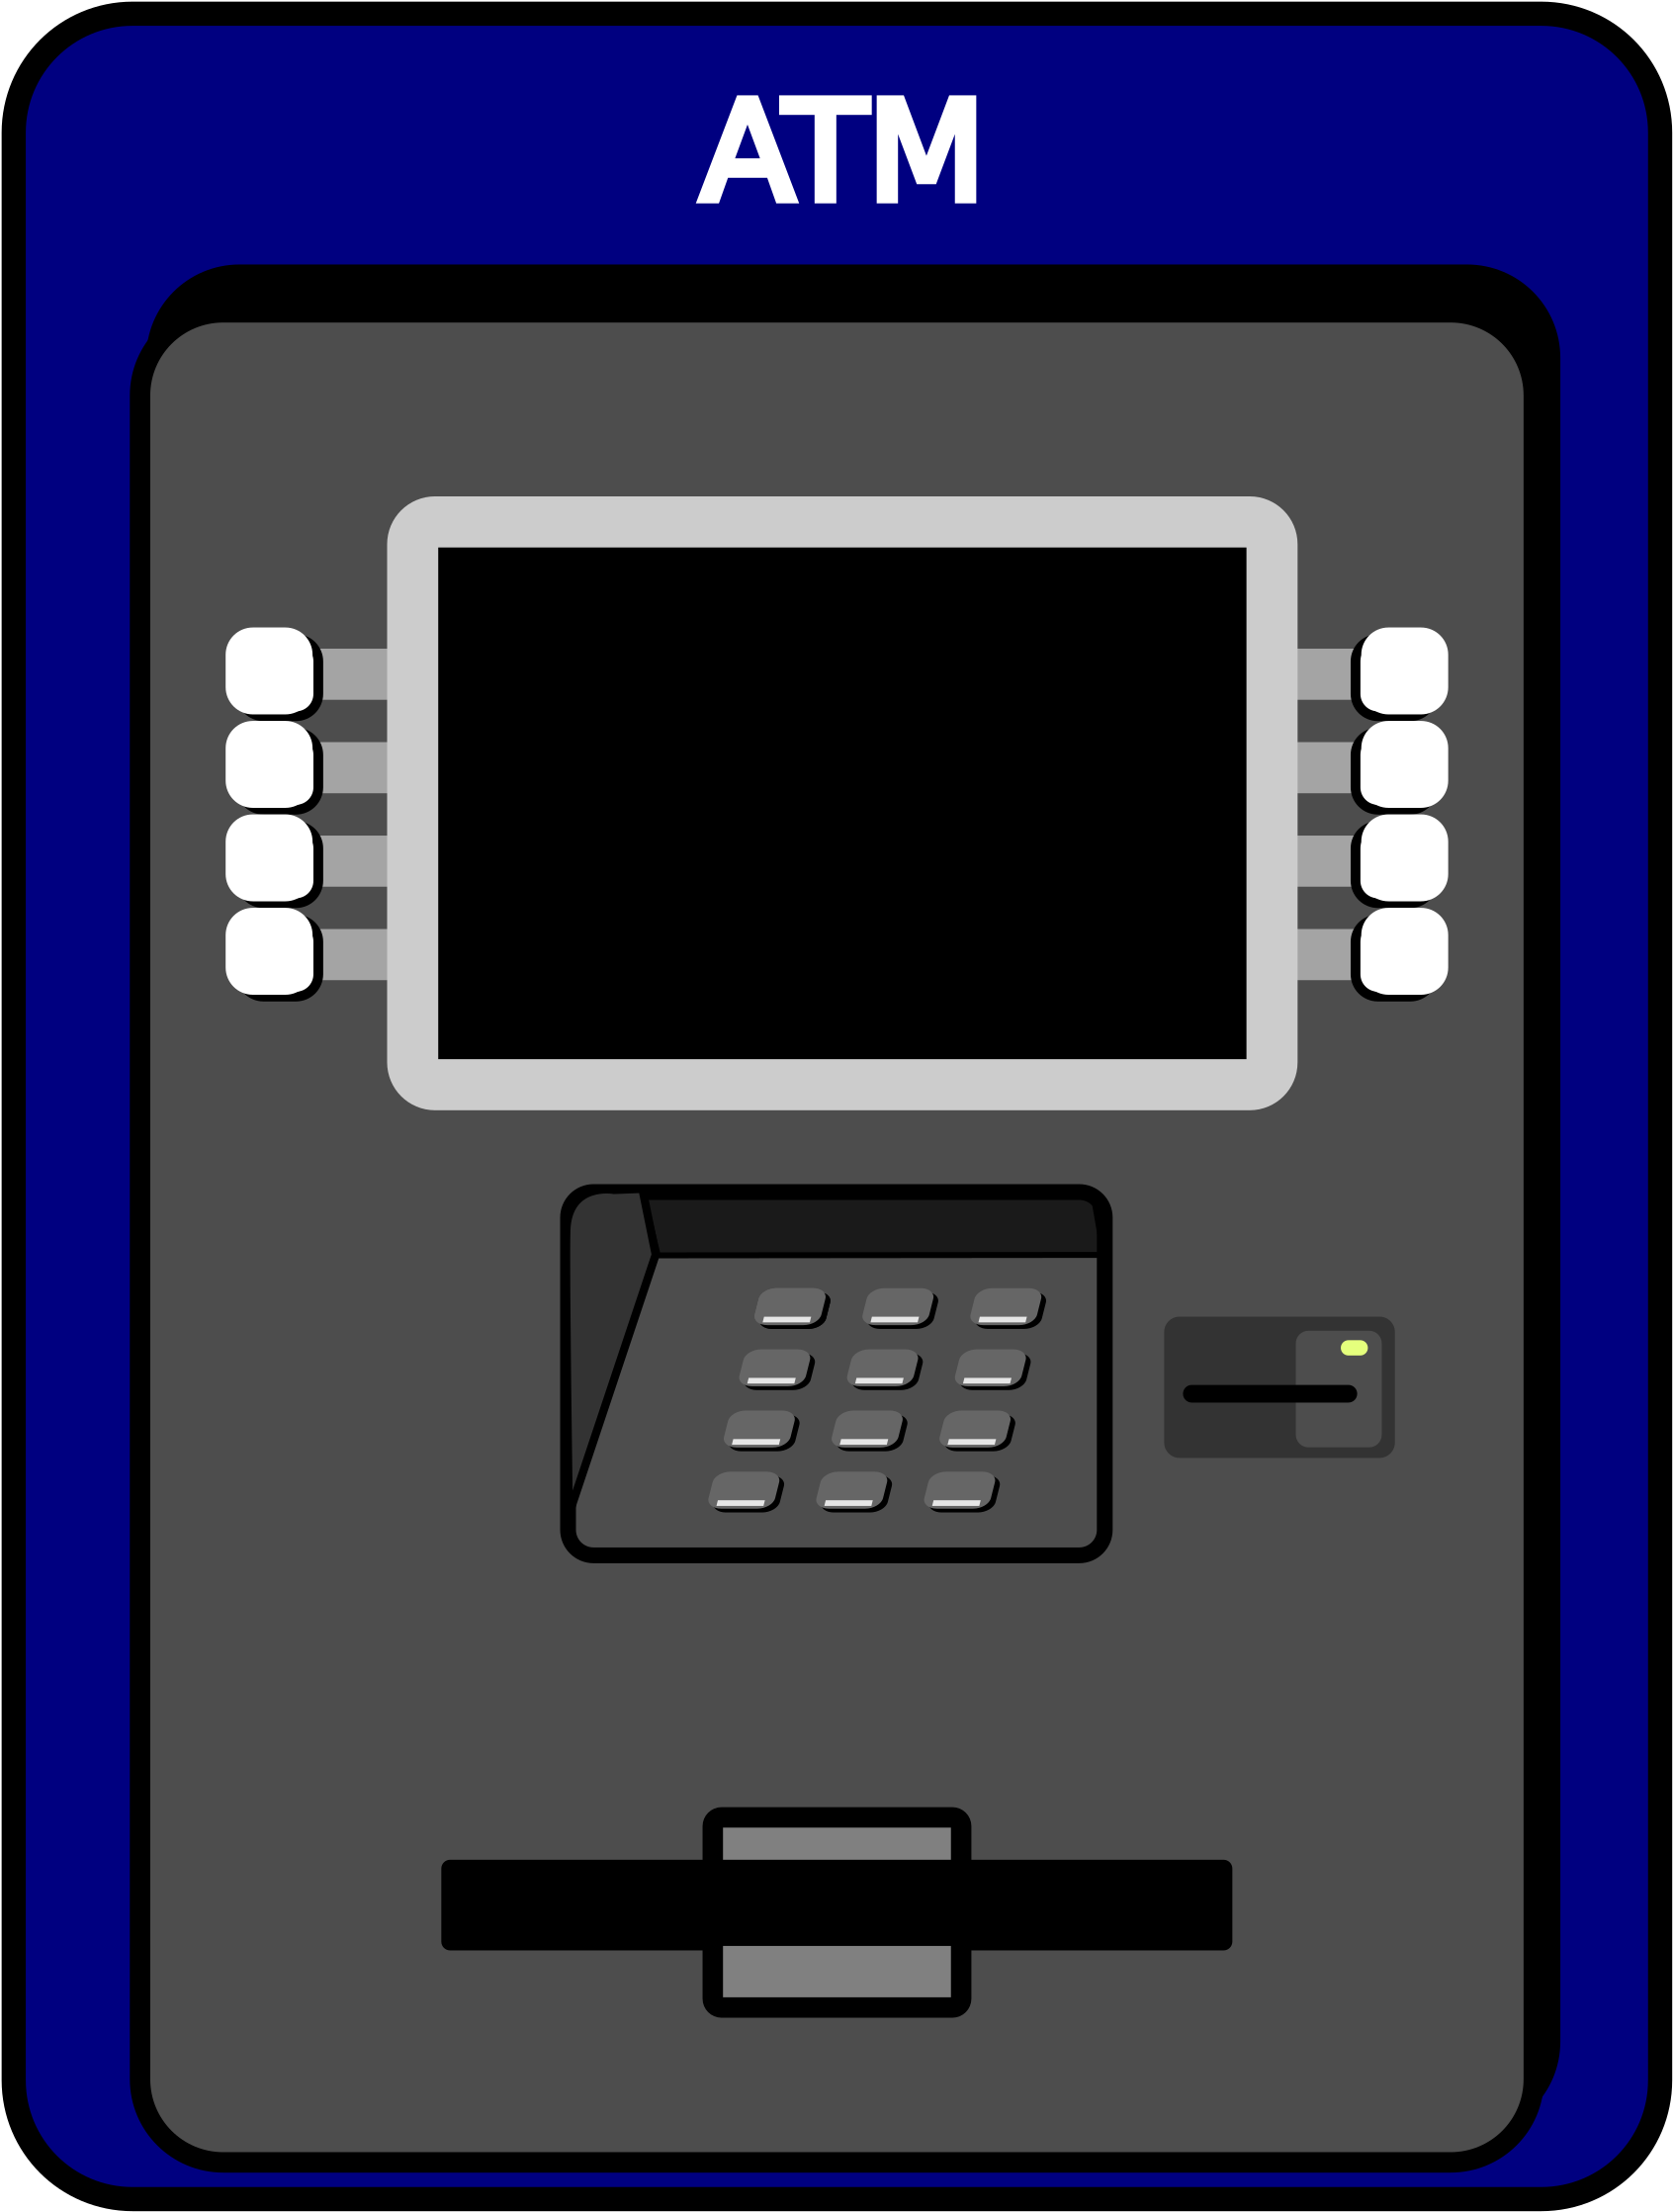 Banking machines